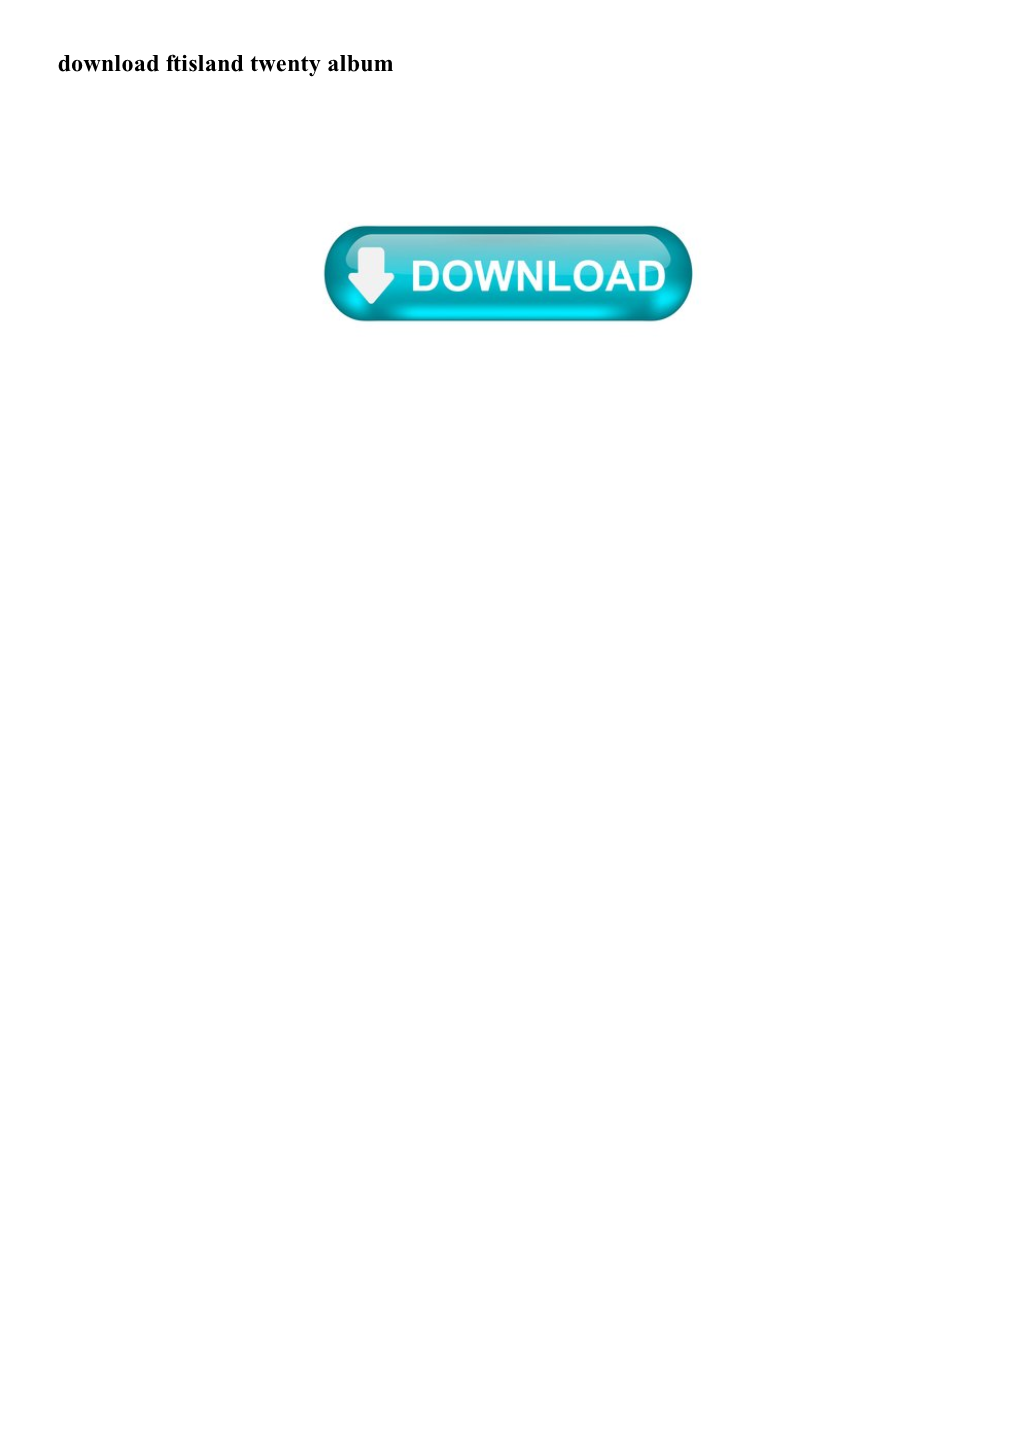 Download Ftisland Twenty Album Easy Way to Take and Get It Music Free Ftisland Venus Mp3 Download